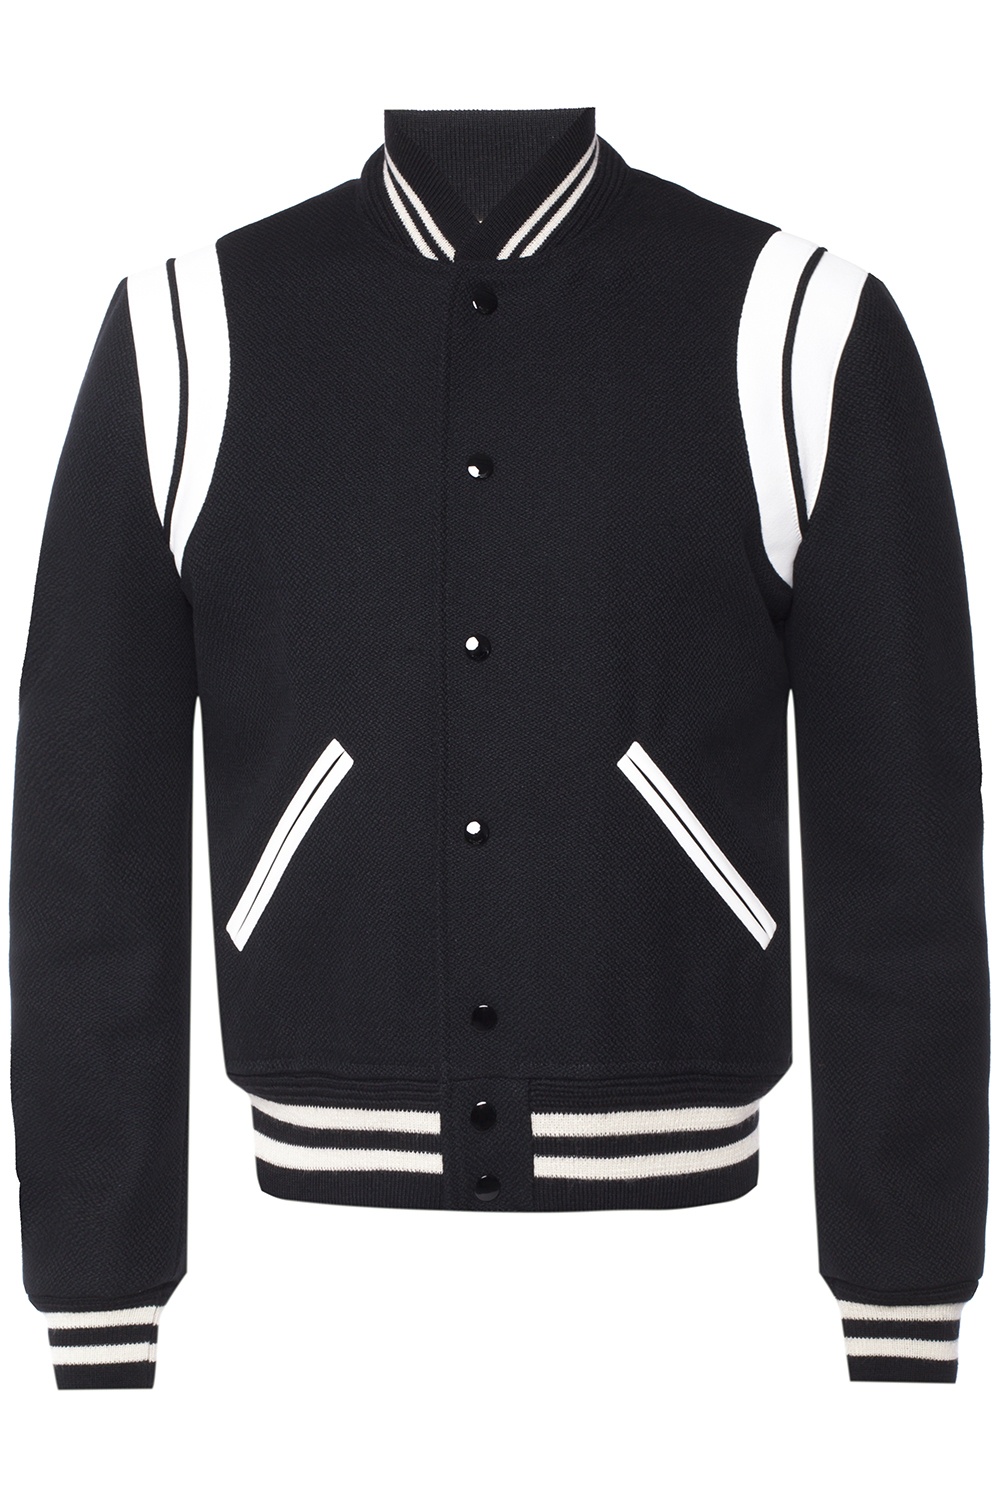 Saint Laurent Bomber jacket | Men's Clothing | Vitkac